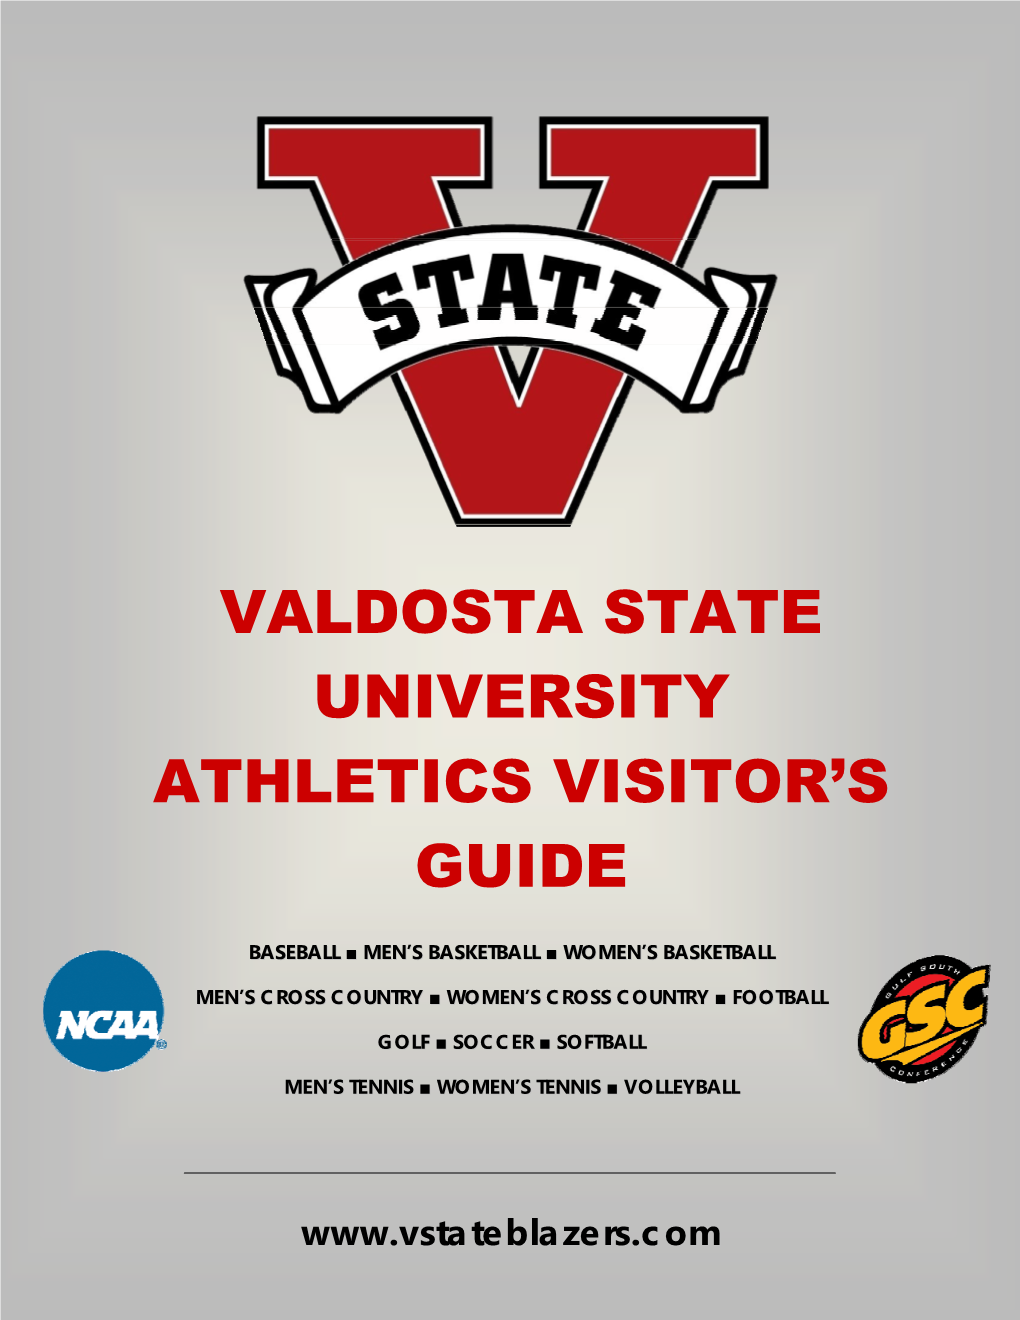 Valdosta State University Athletics Visitor's Guide